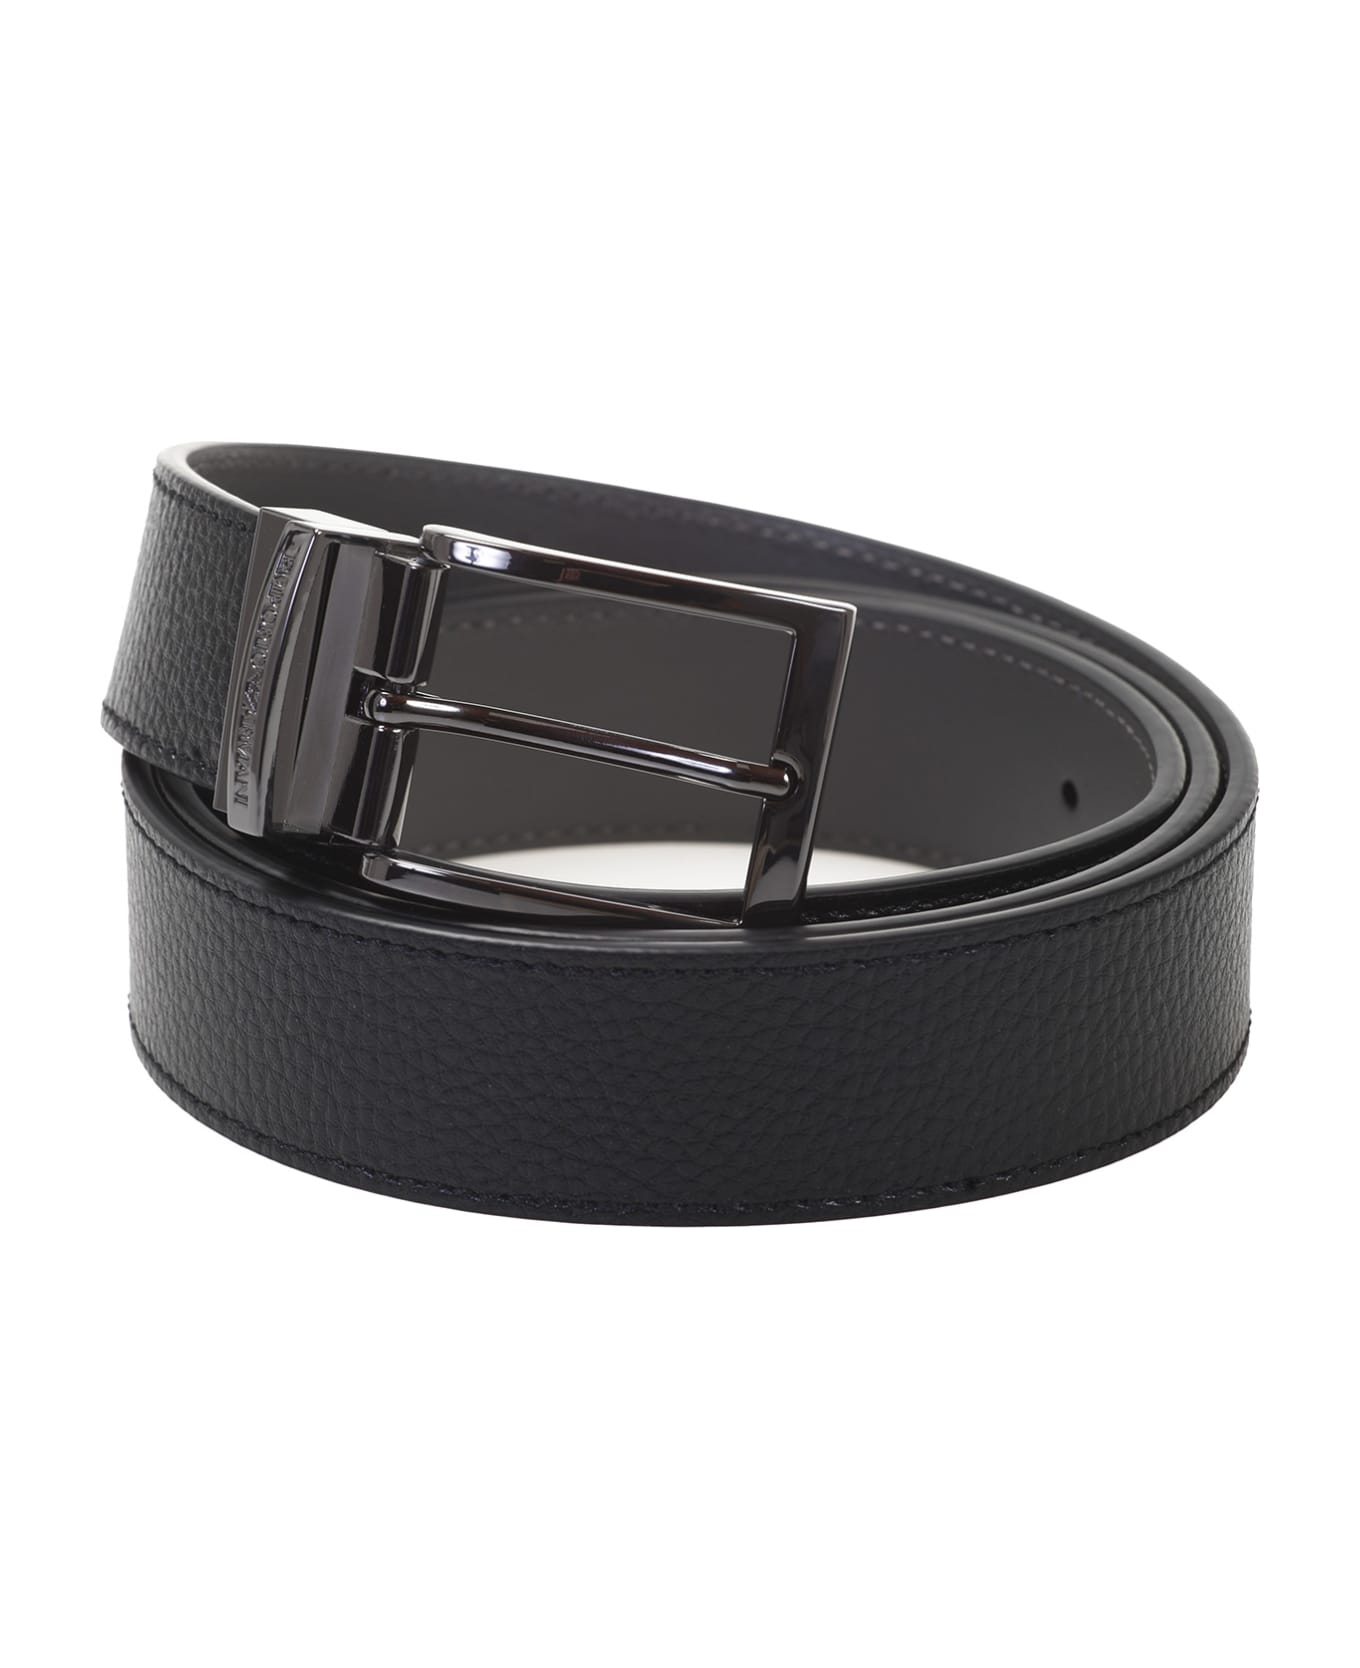 Emporio Armani Leather Belt - Nero/grigio